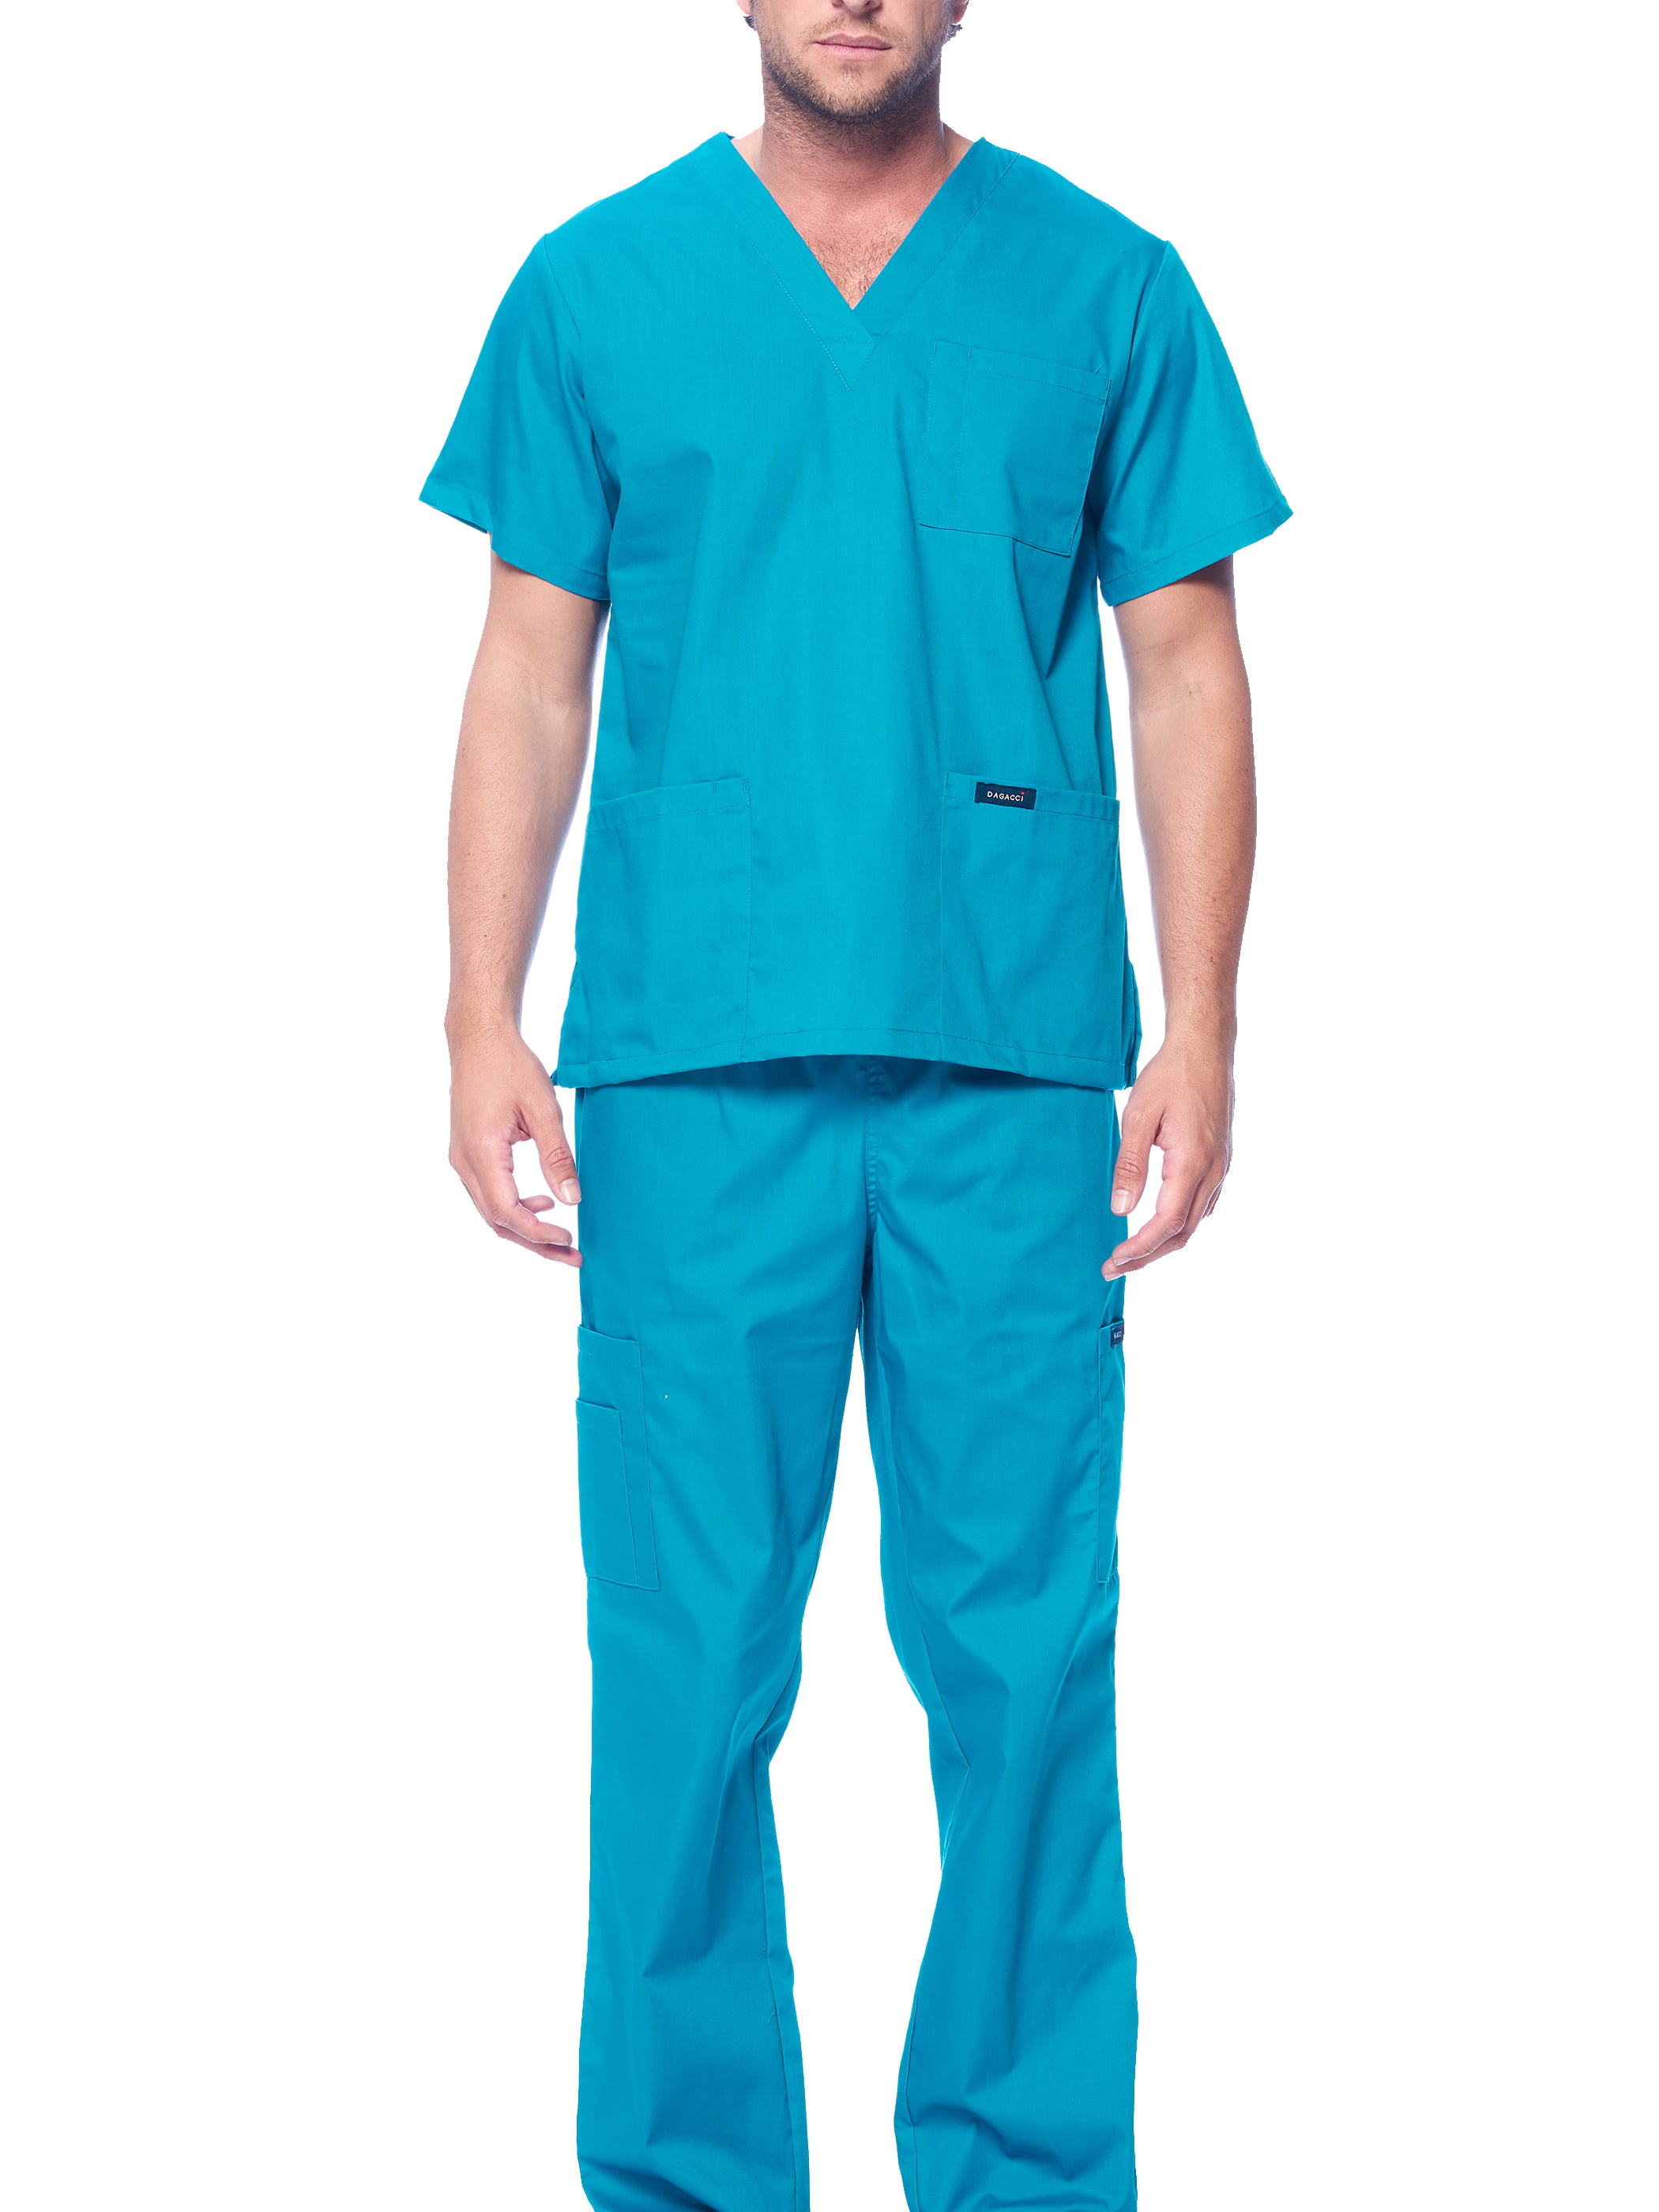 Dagacci Medical Uniform Unisex 4-Way Stretch Scrubs Set Medical Scrubs Top and Pants 